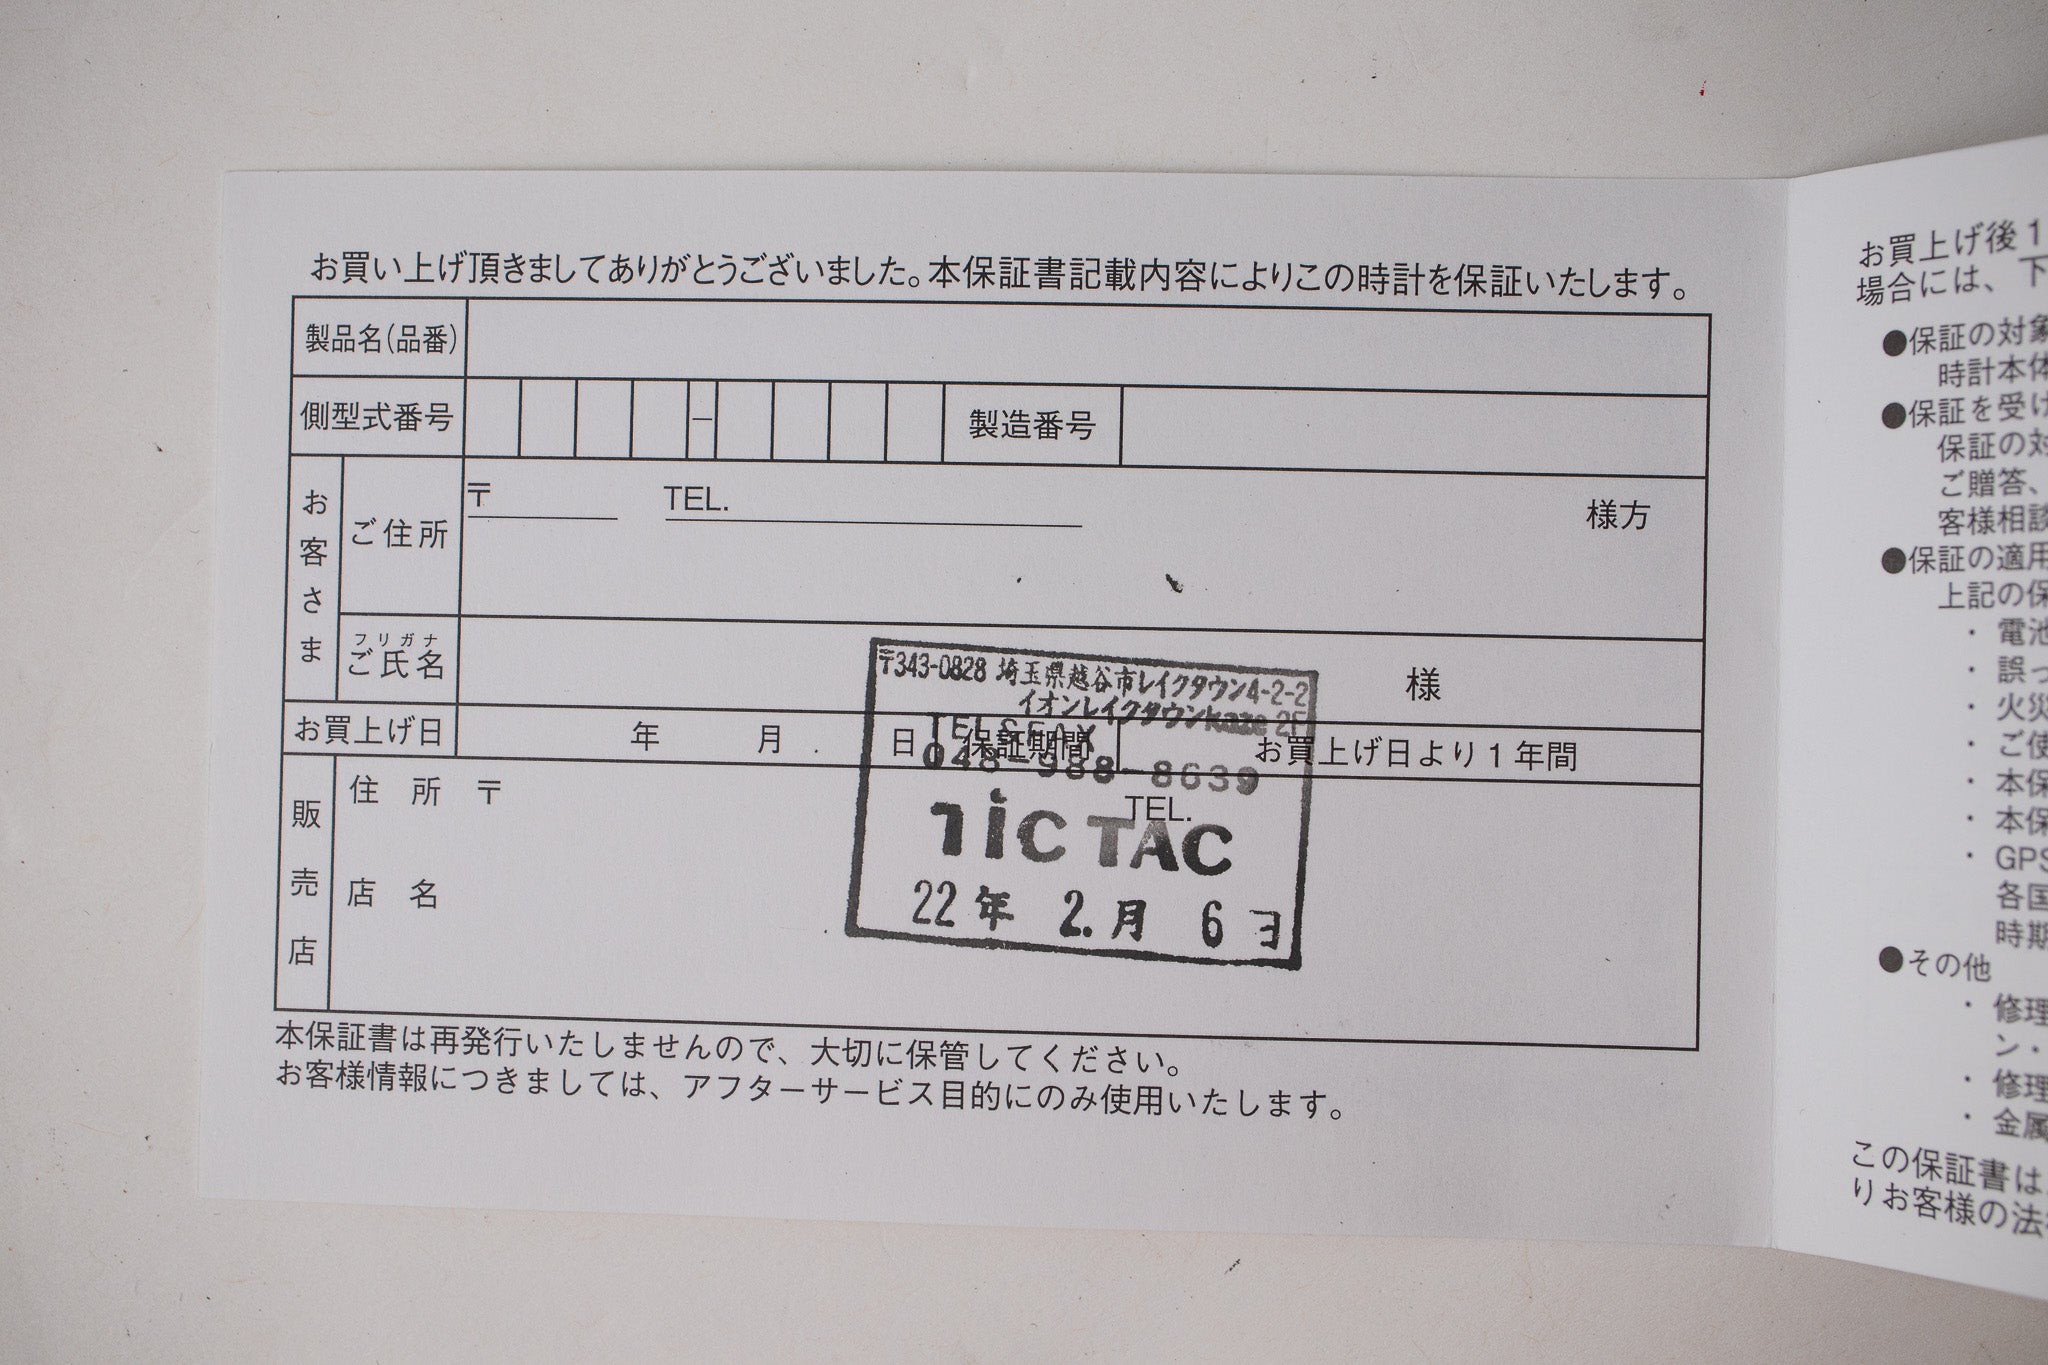 Seiko X TicTac 35th Anniversary Special Edition SZSB021